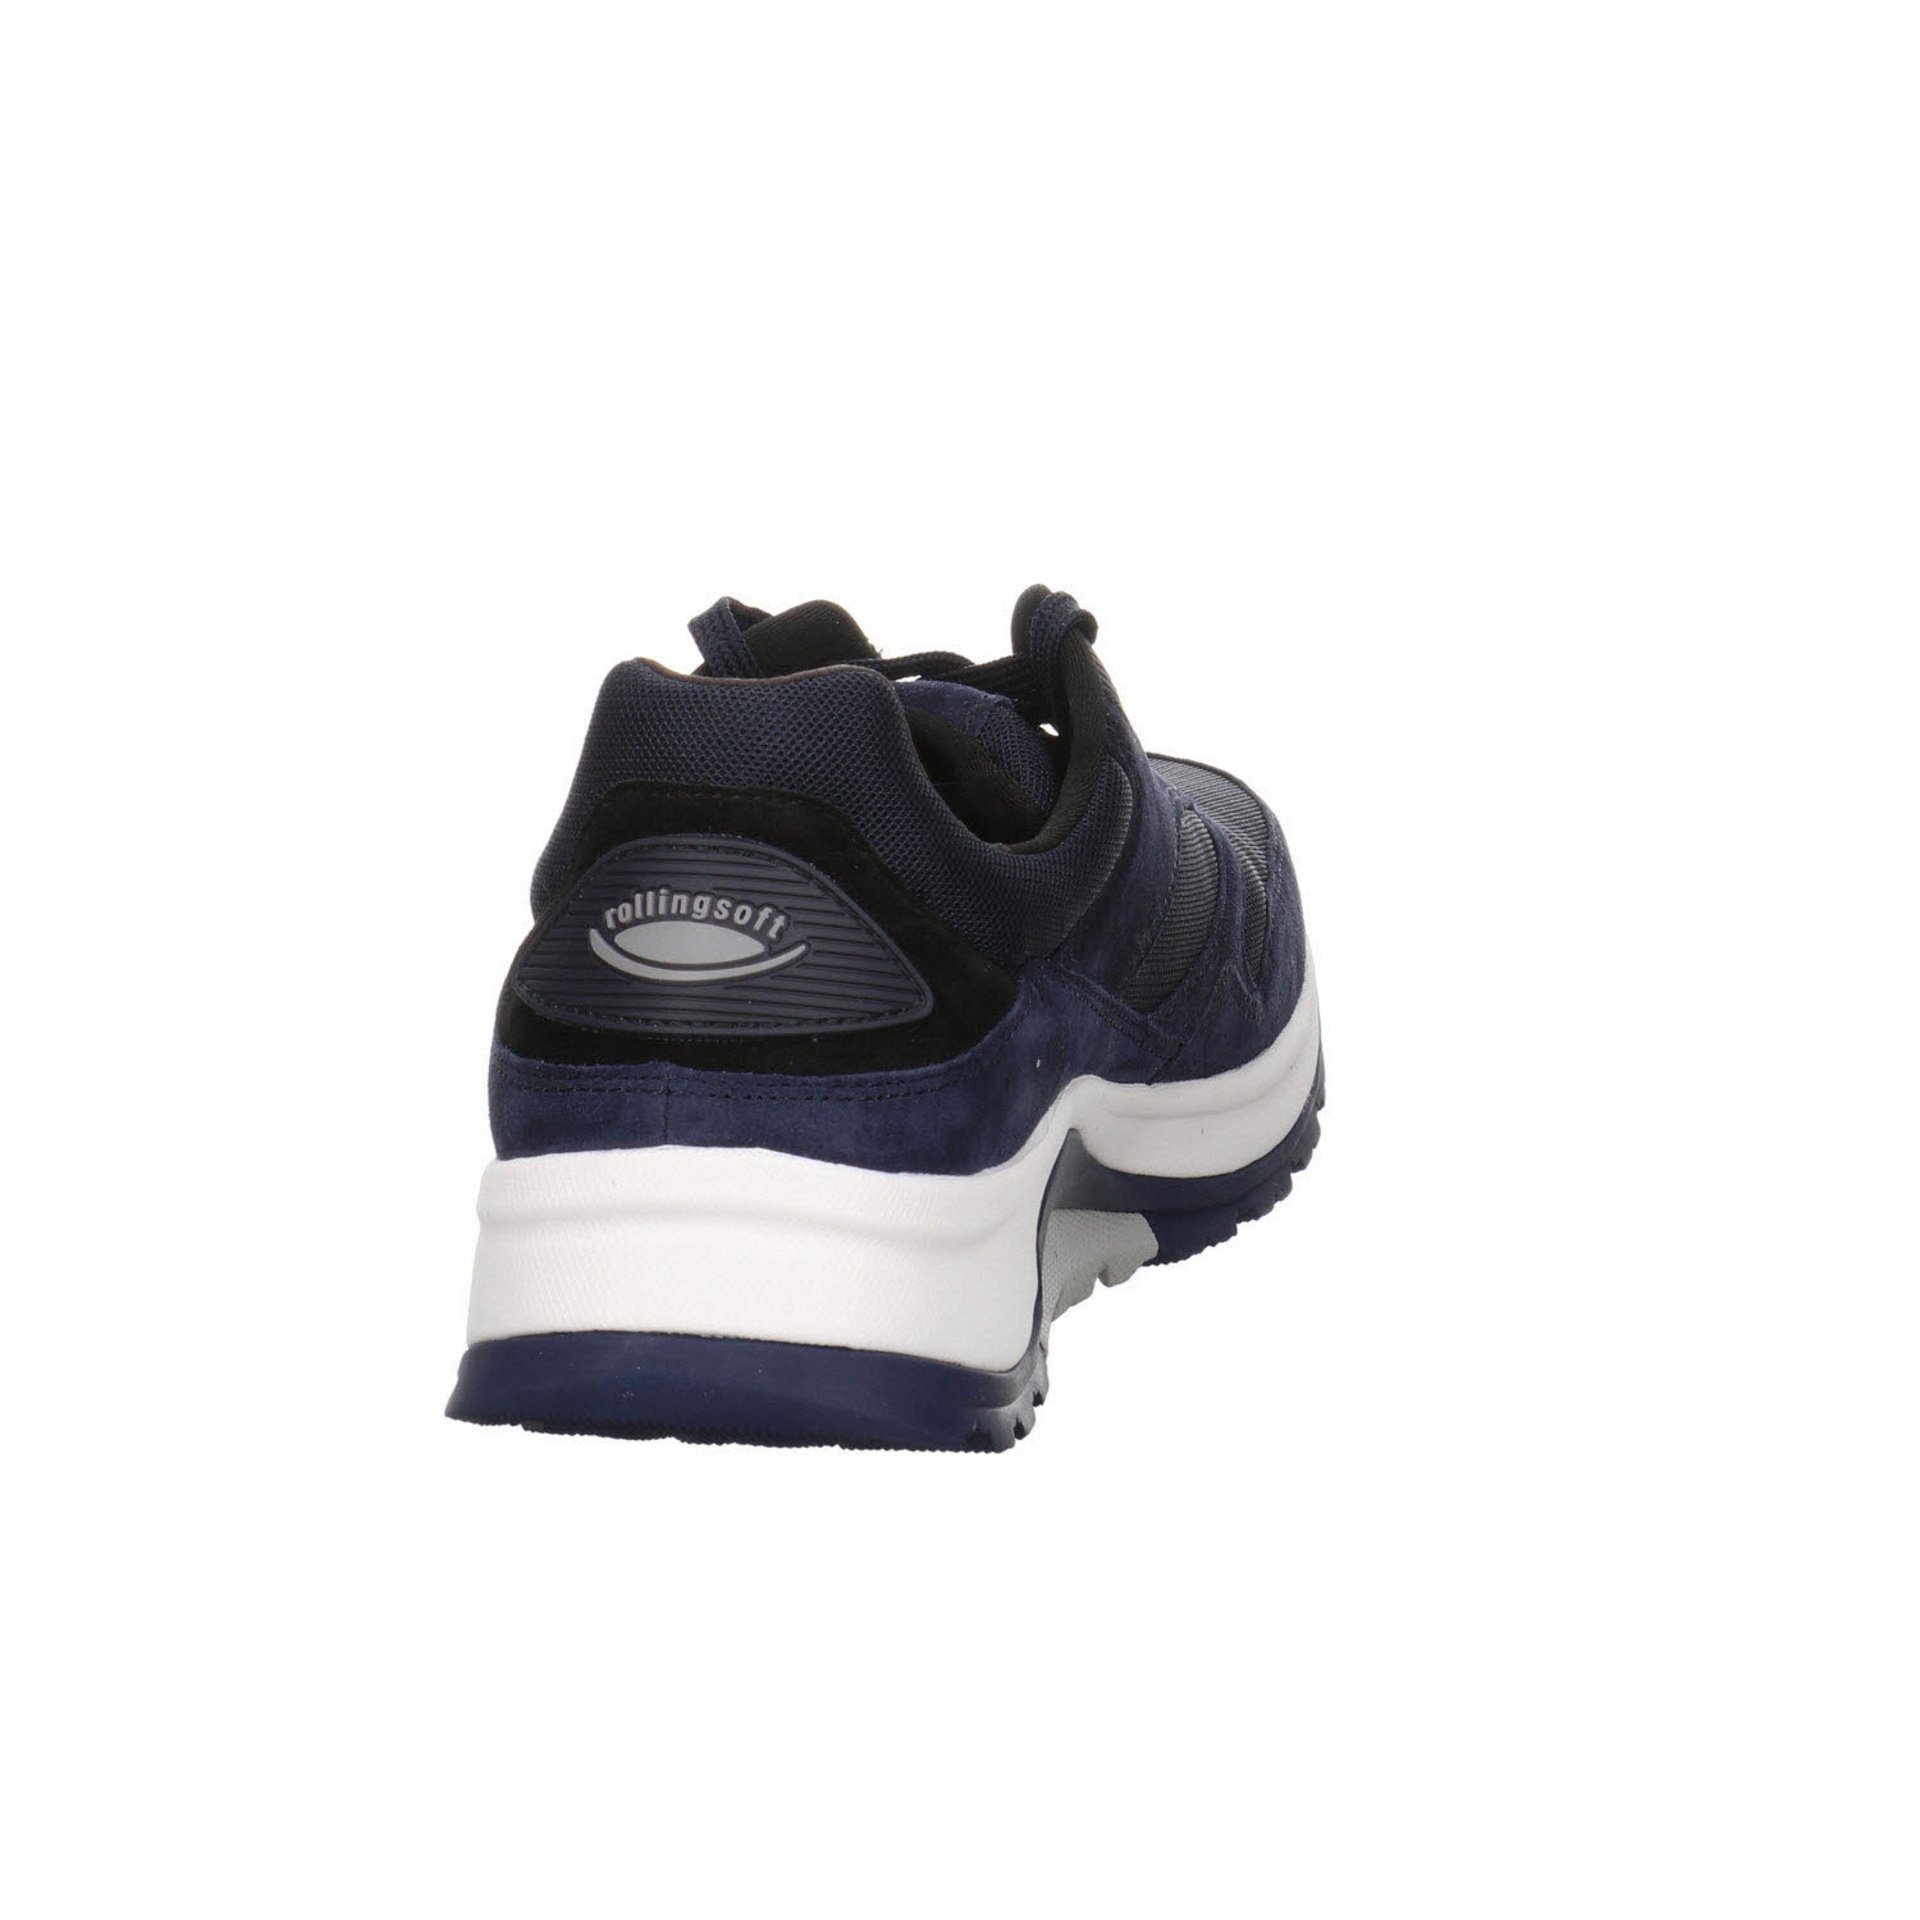 Pius Herren Rollingsoft dunkel Sneaker Schnürschuh Sneaker Leder-/Textilkombination Schuhe blau Gabor